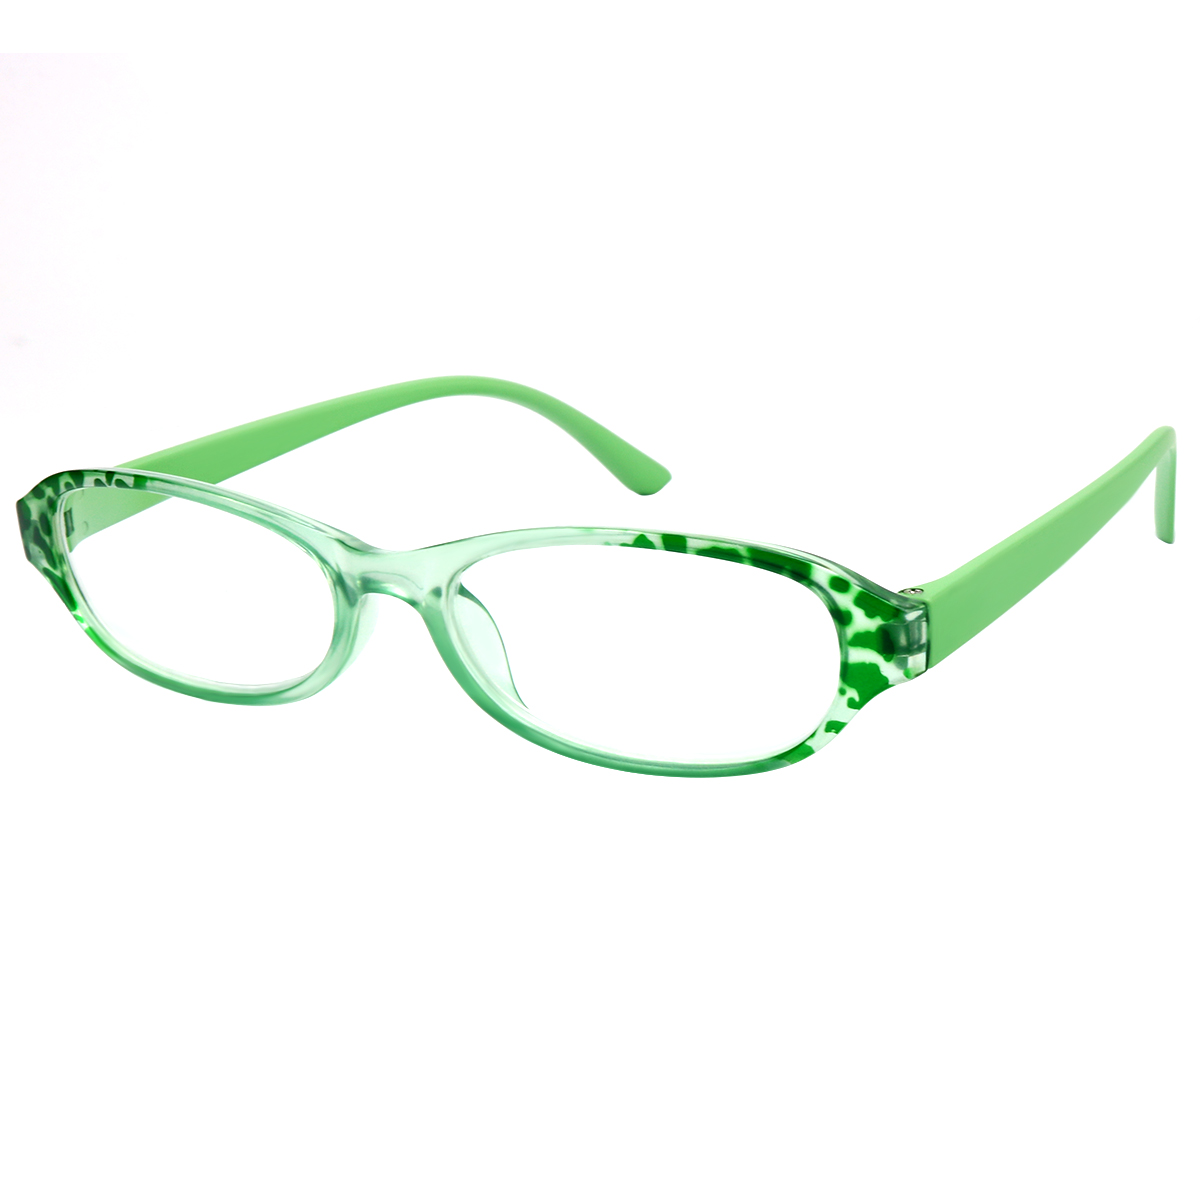 Palmetto - Oval Green Reading Glasses for Women